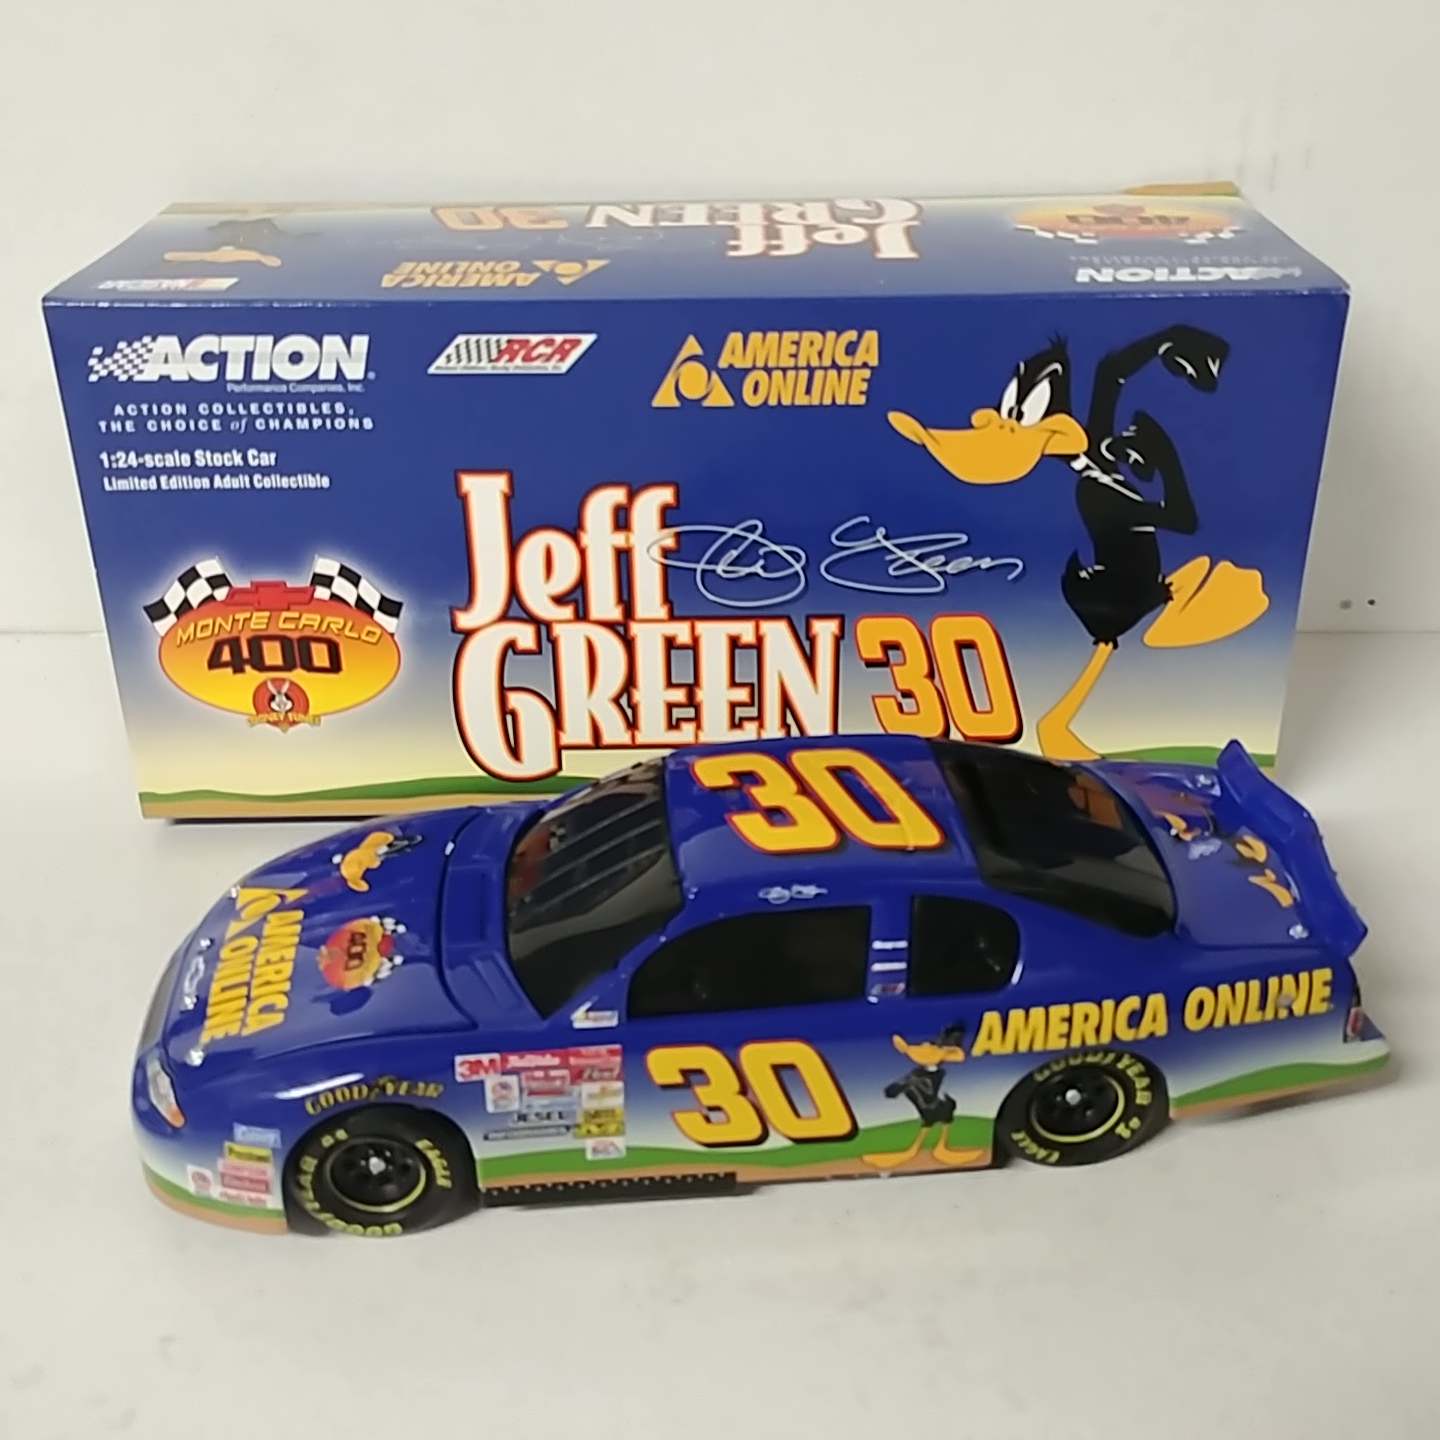 2001 Jeff Green 1/24th AOL "Looney Tunes" b/w bank